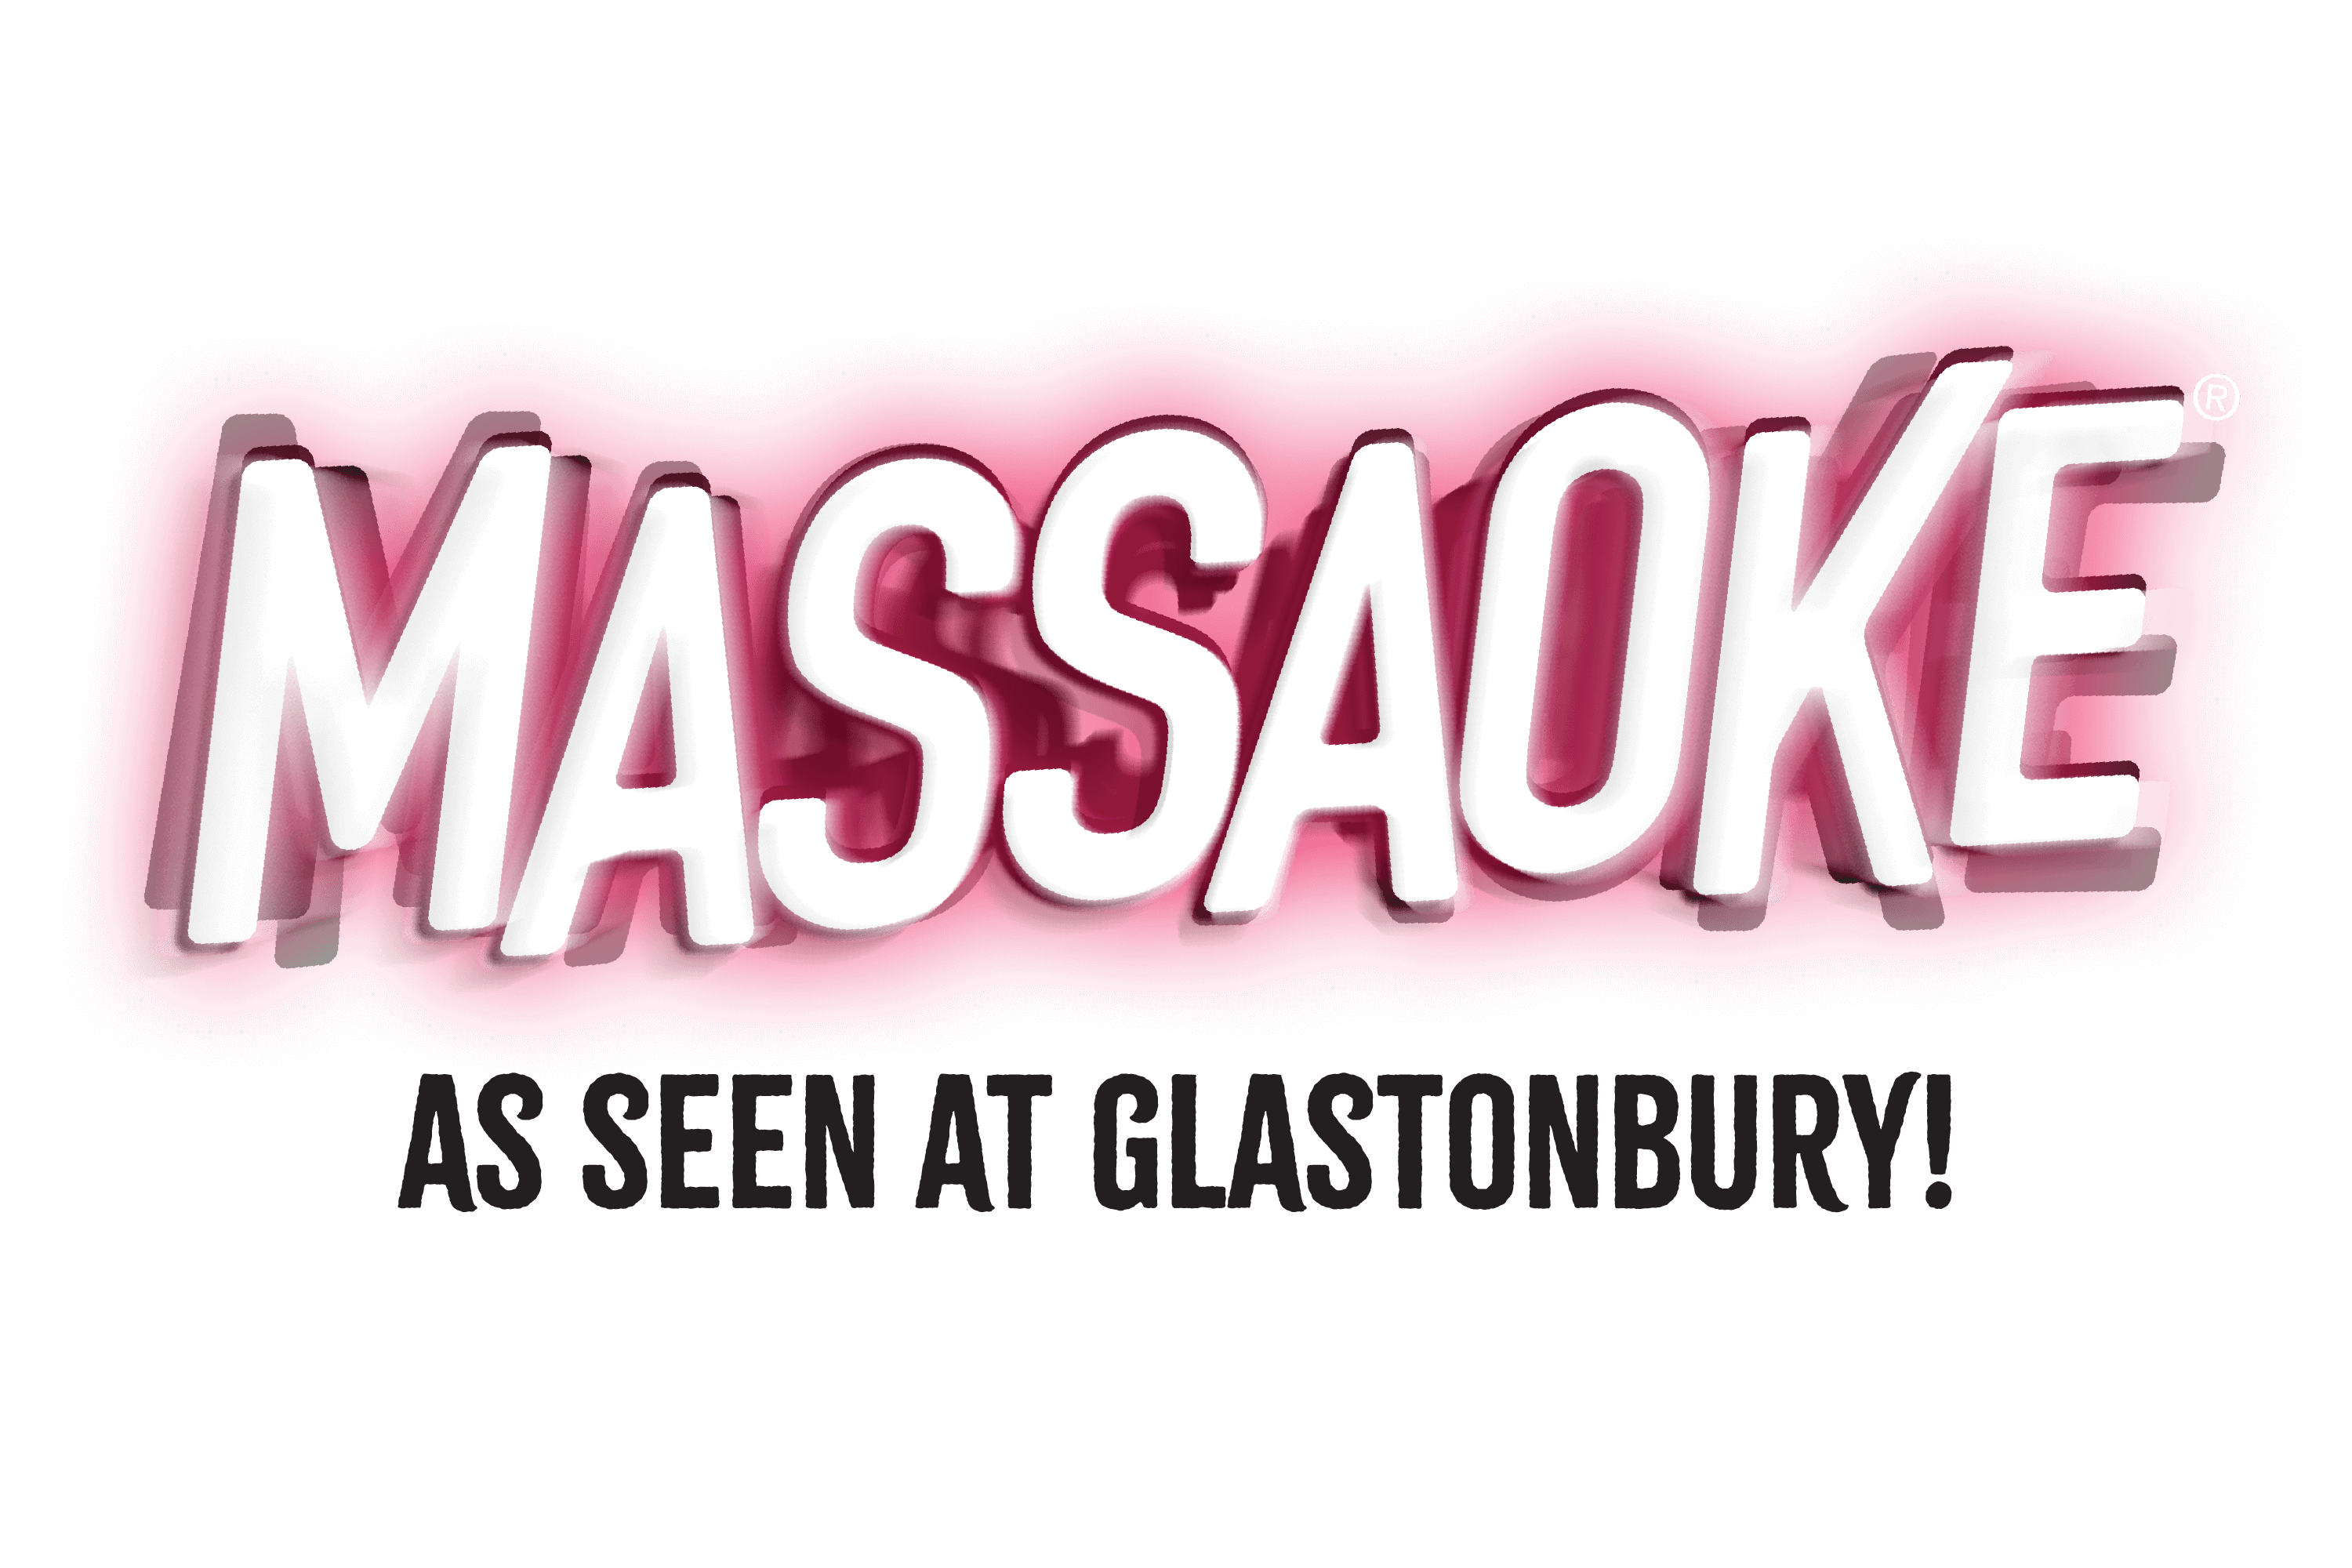 Massaoke logo. As seen at Glastonbury!